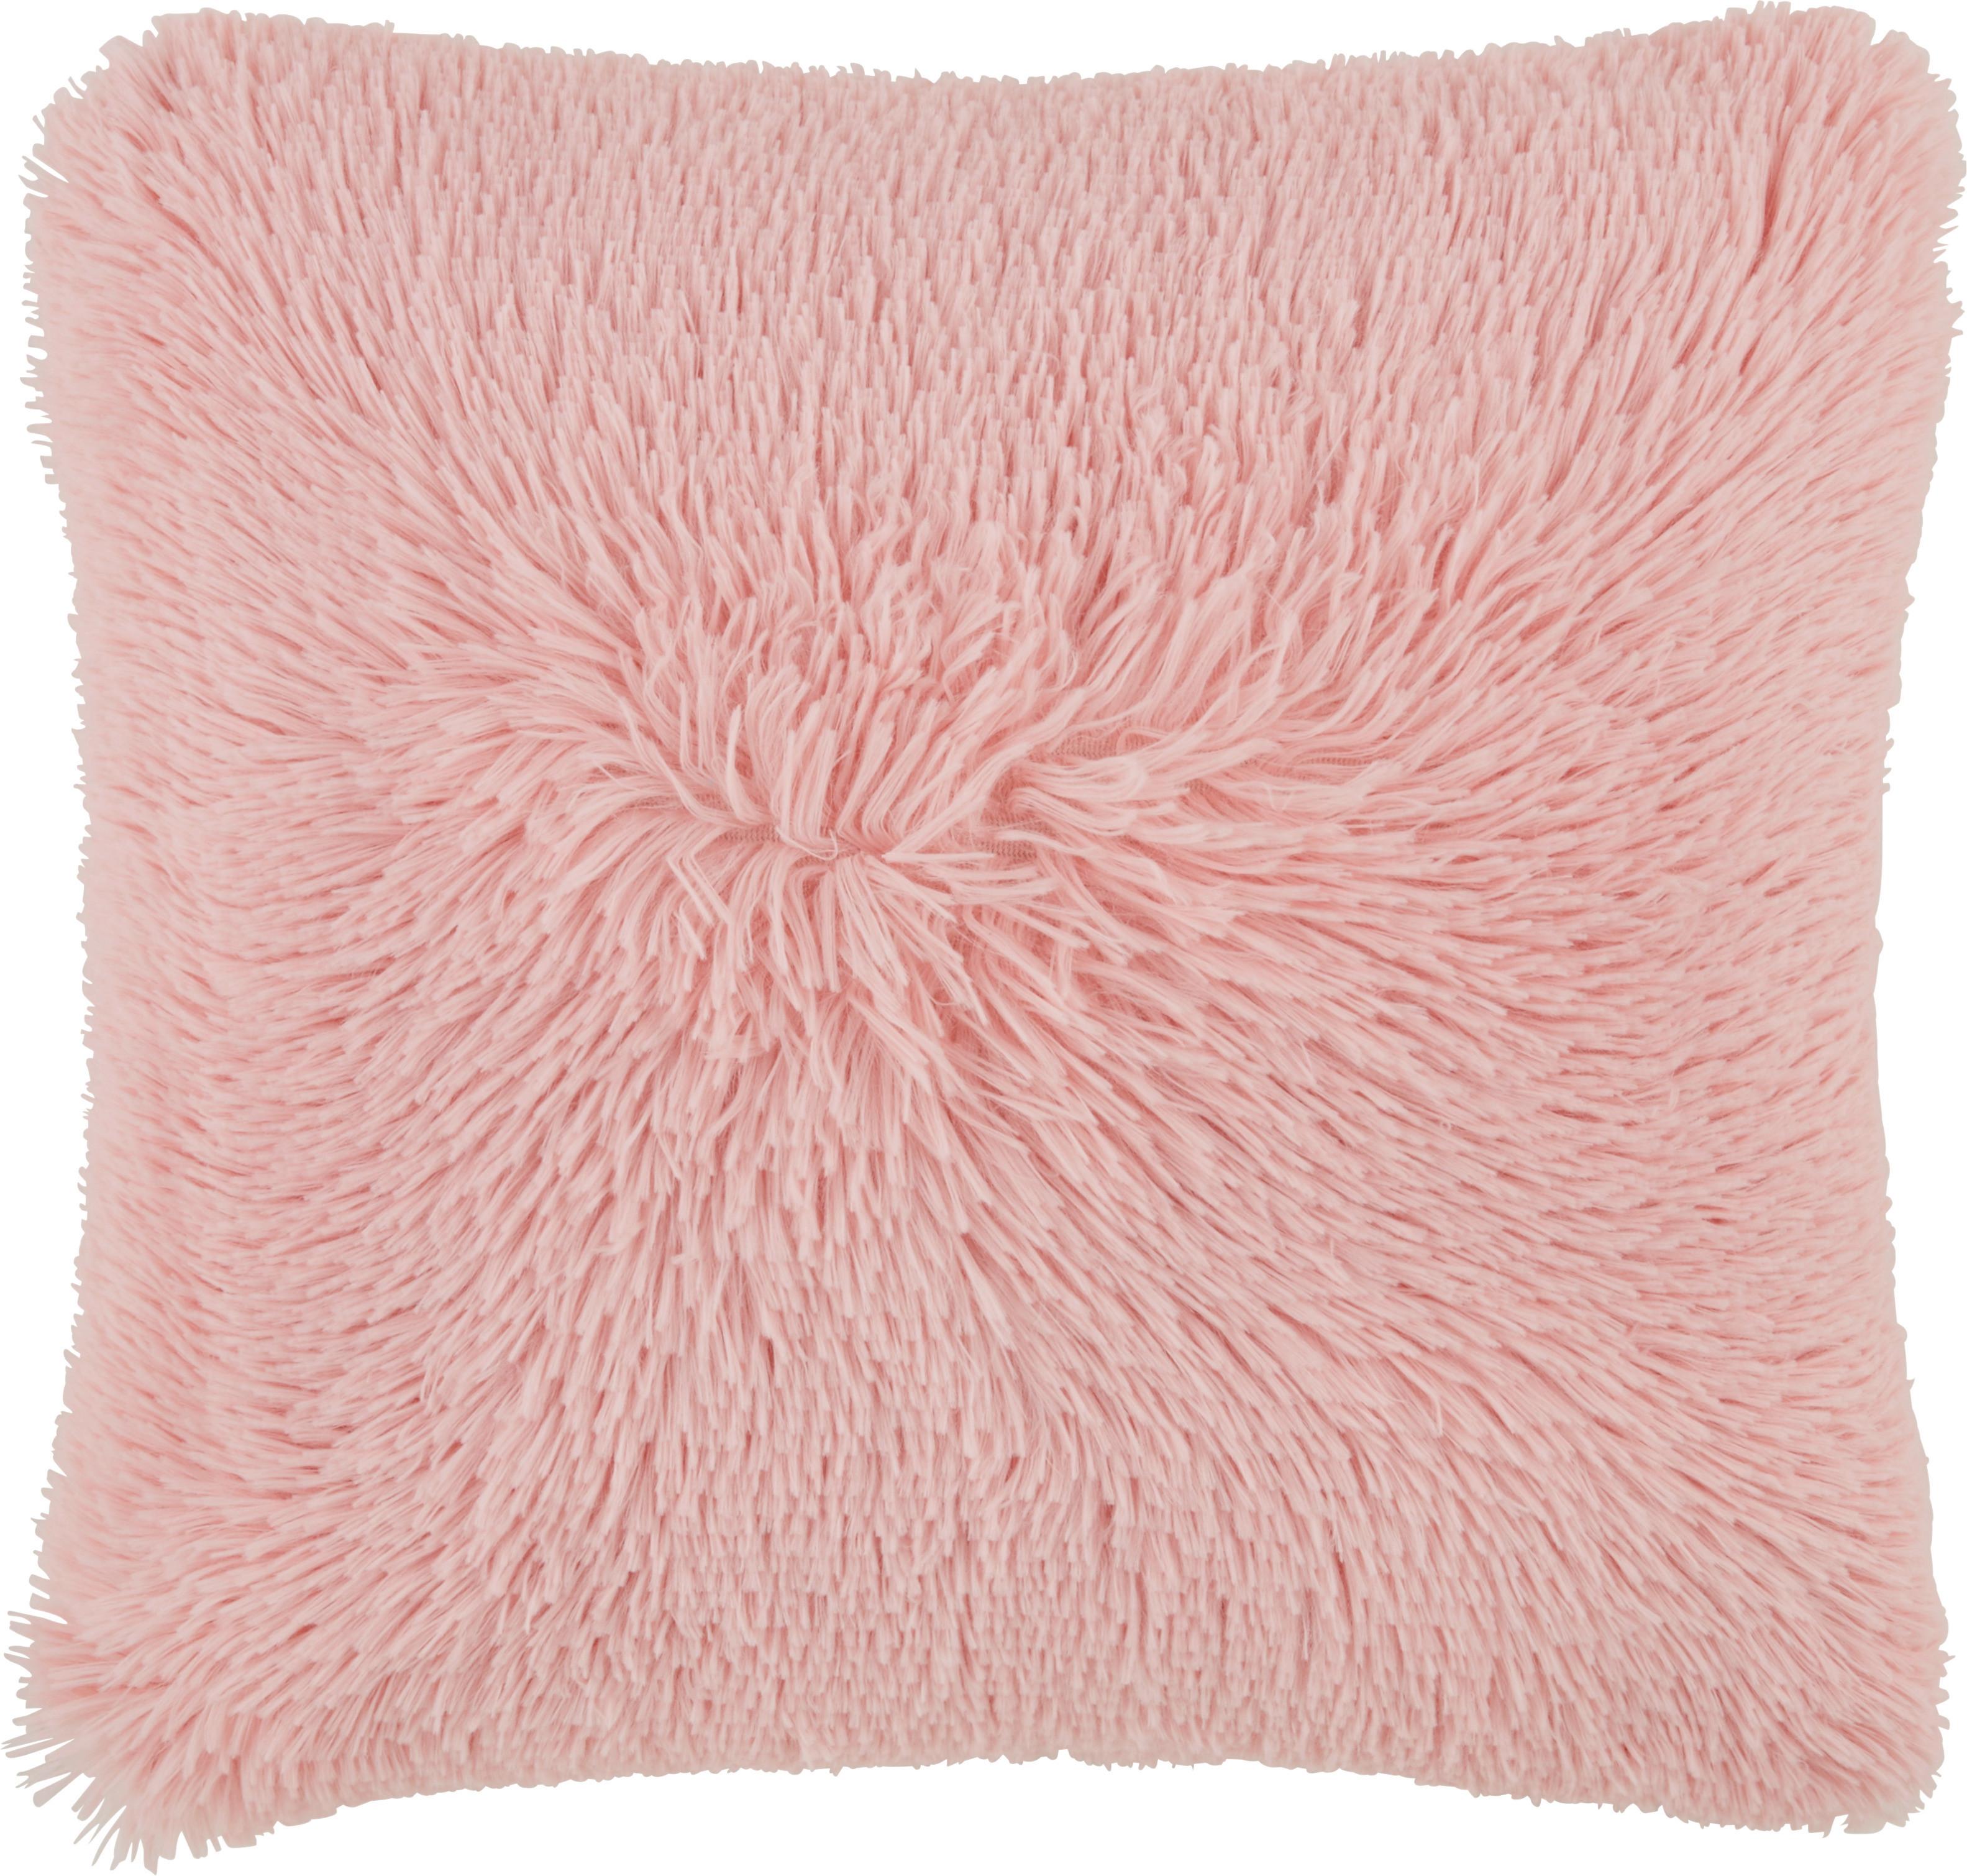 Polštář Ozdobný Fluffy, 45/45 Cm, Růžová - růžová, textil (45/45cm) - Modern Living